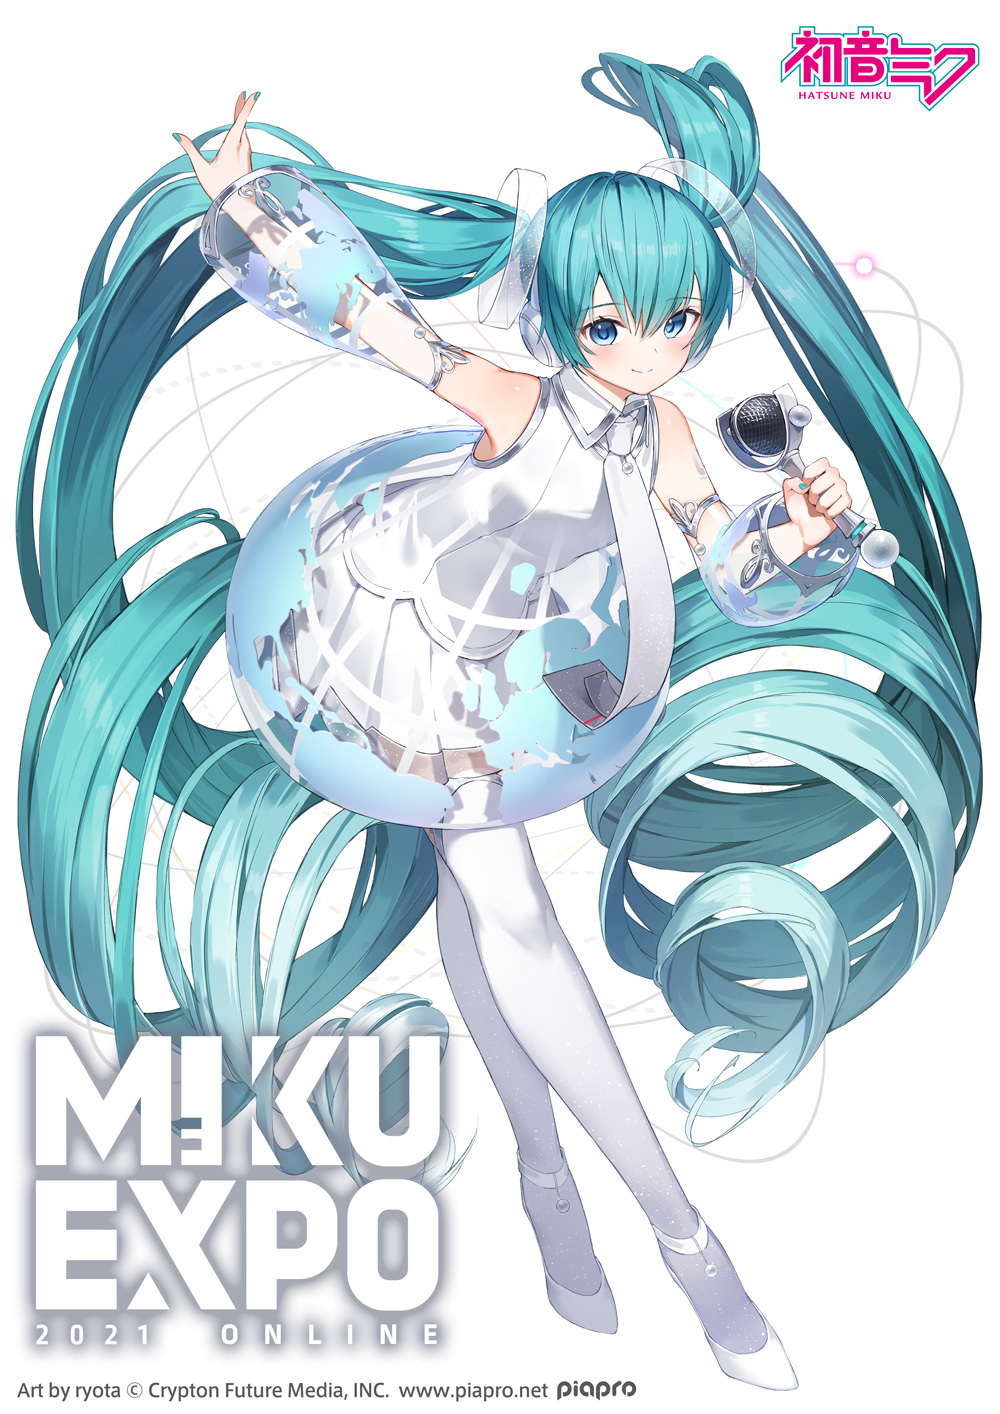 miku-expo-rewind-on-twitter-mikuexpo2021-online-theme-song